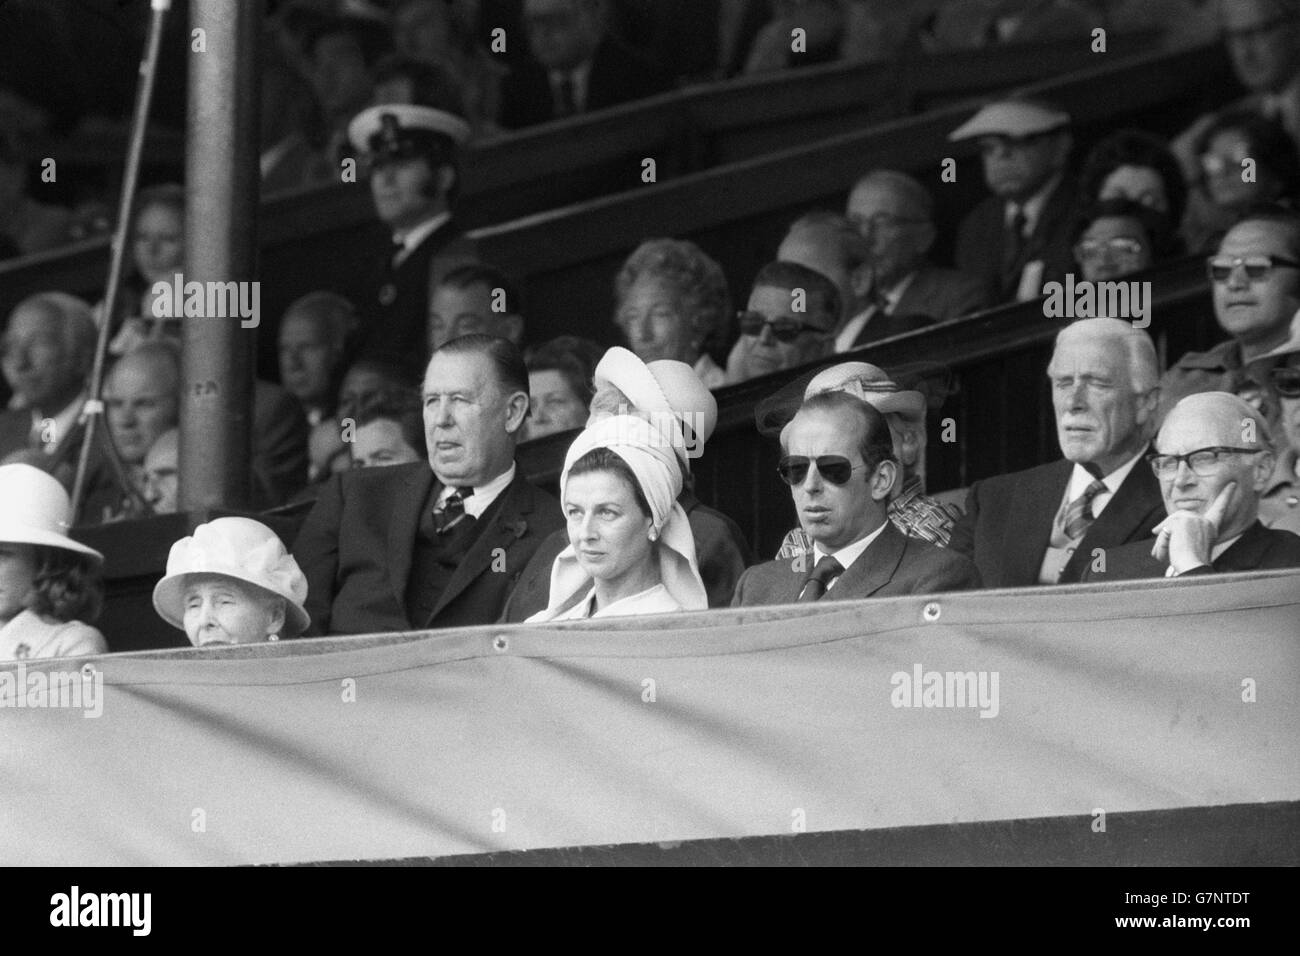 Tennis - Wimbledon - Men's Singles Final - Jimmy Connors v Arthur Ashe - Centre Court. Princess Alexandra of Kent and Prince Edward, Duke of Kent (dark glasses) attend the Wimbledon Men's Single final. Stock Photo